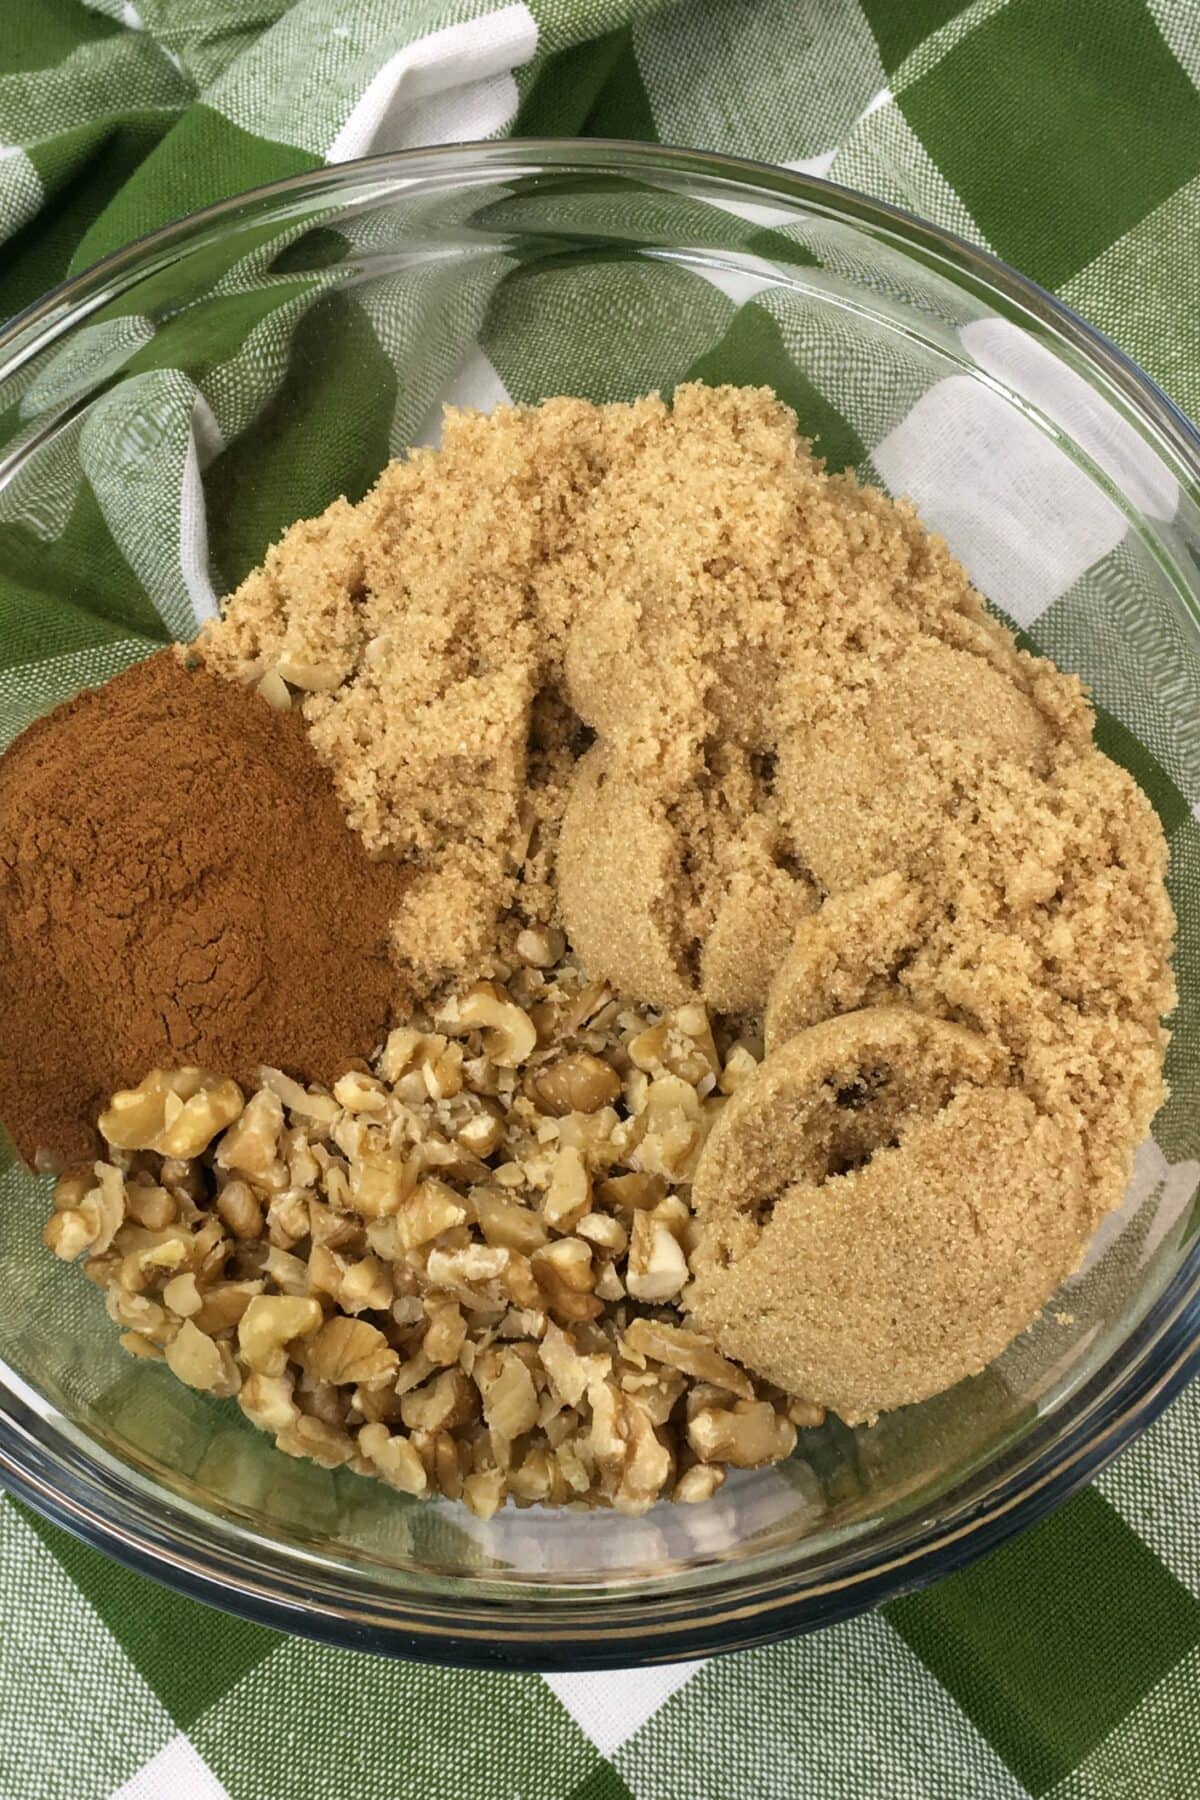 cinnamon swirl ingredients in a bowl